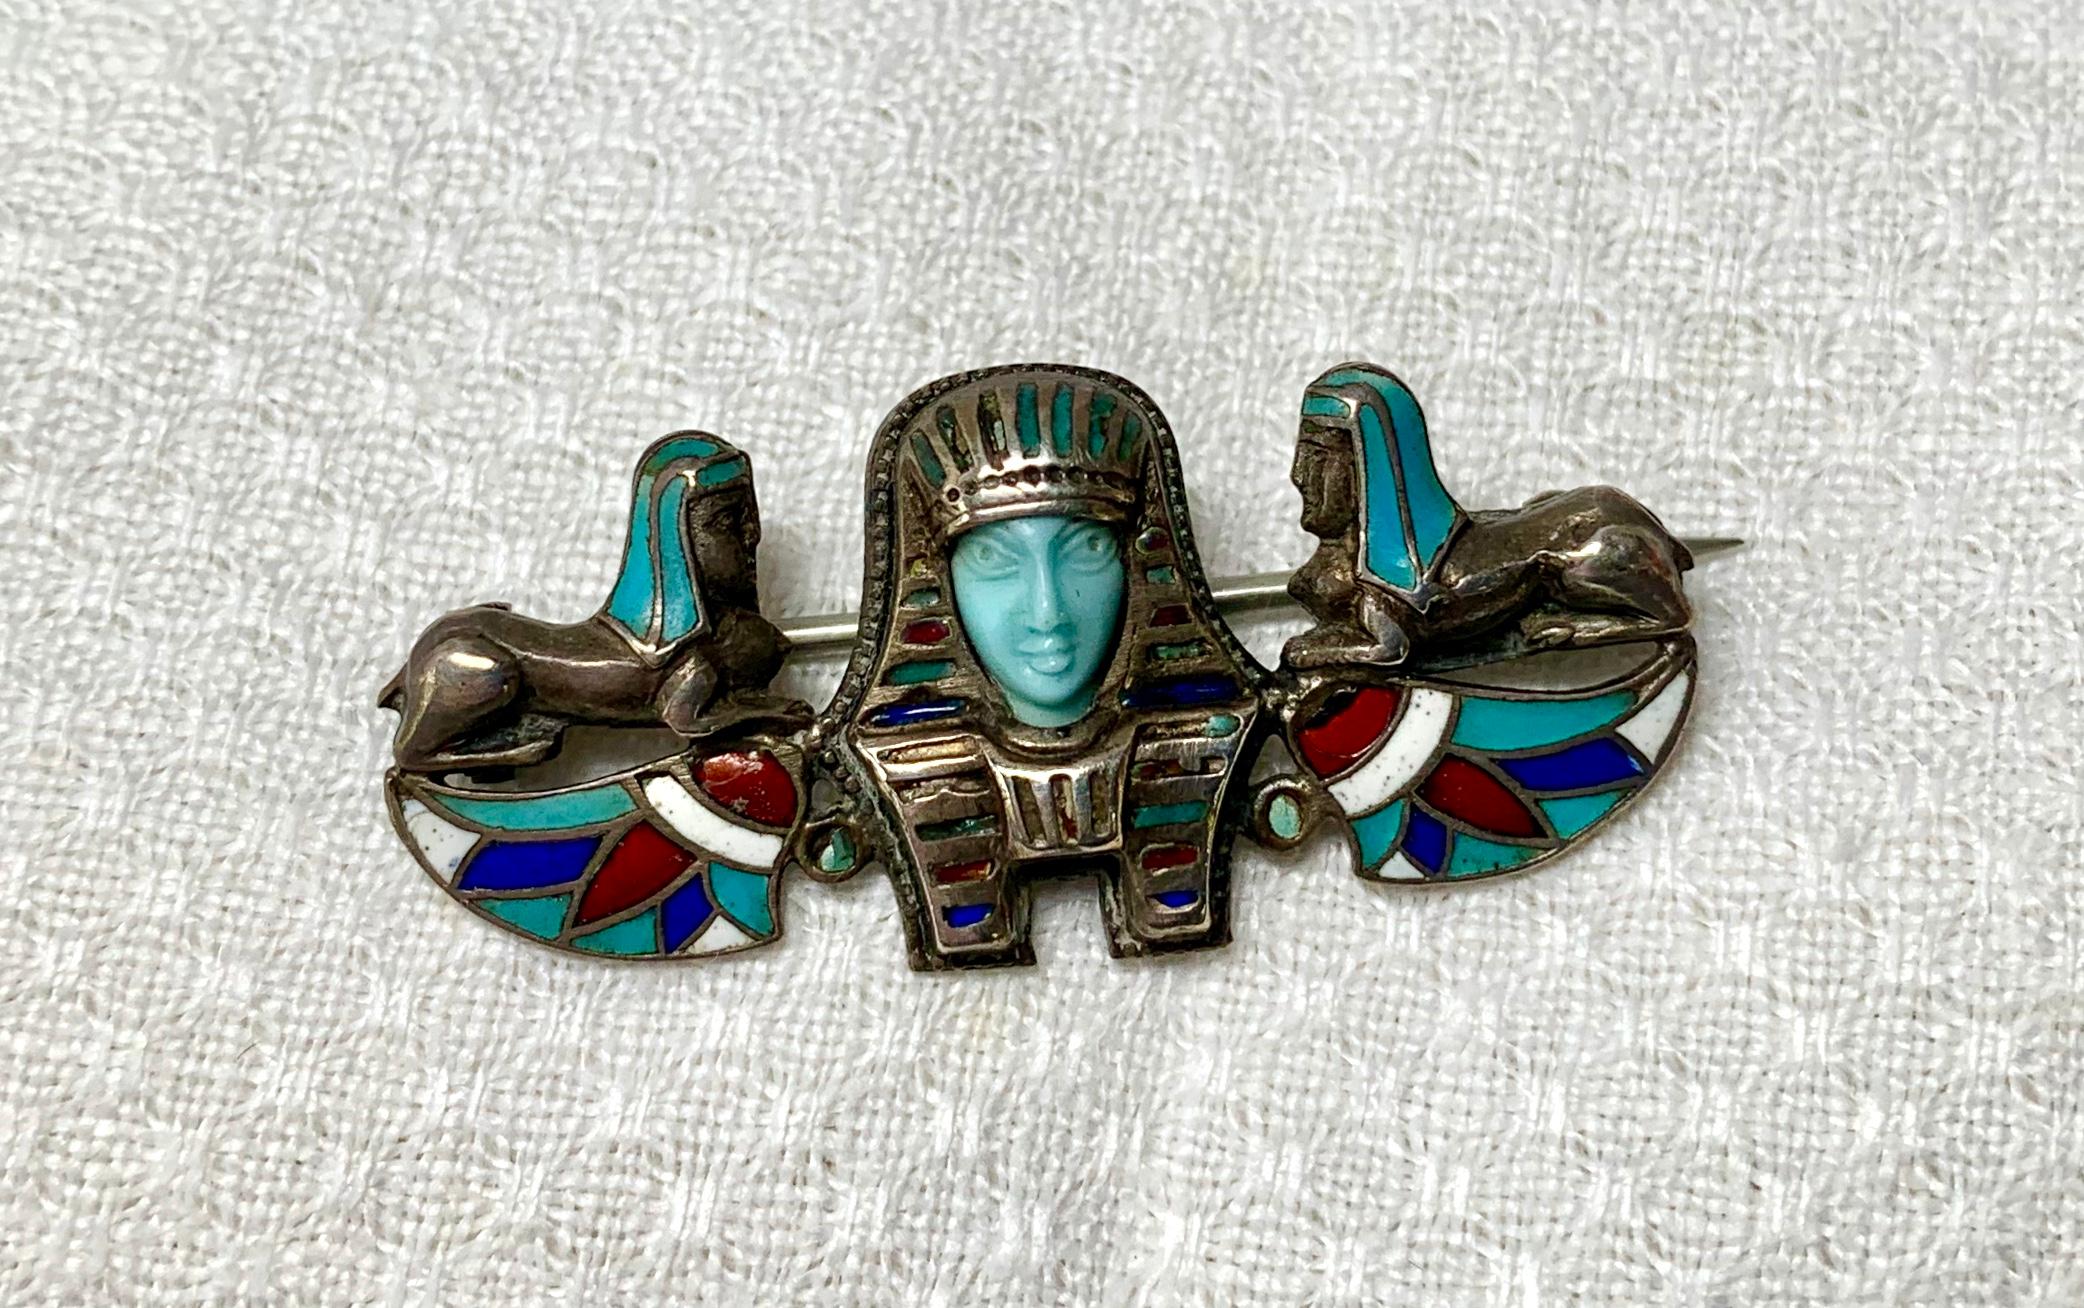 egyptian turquoise jewelry